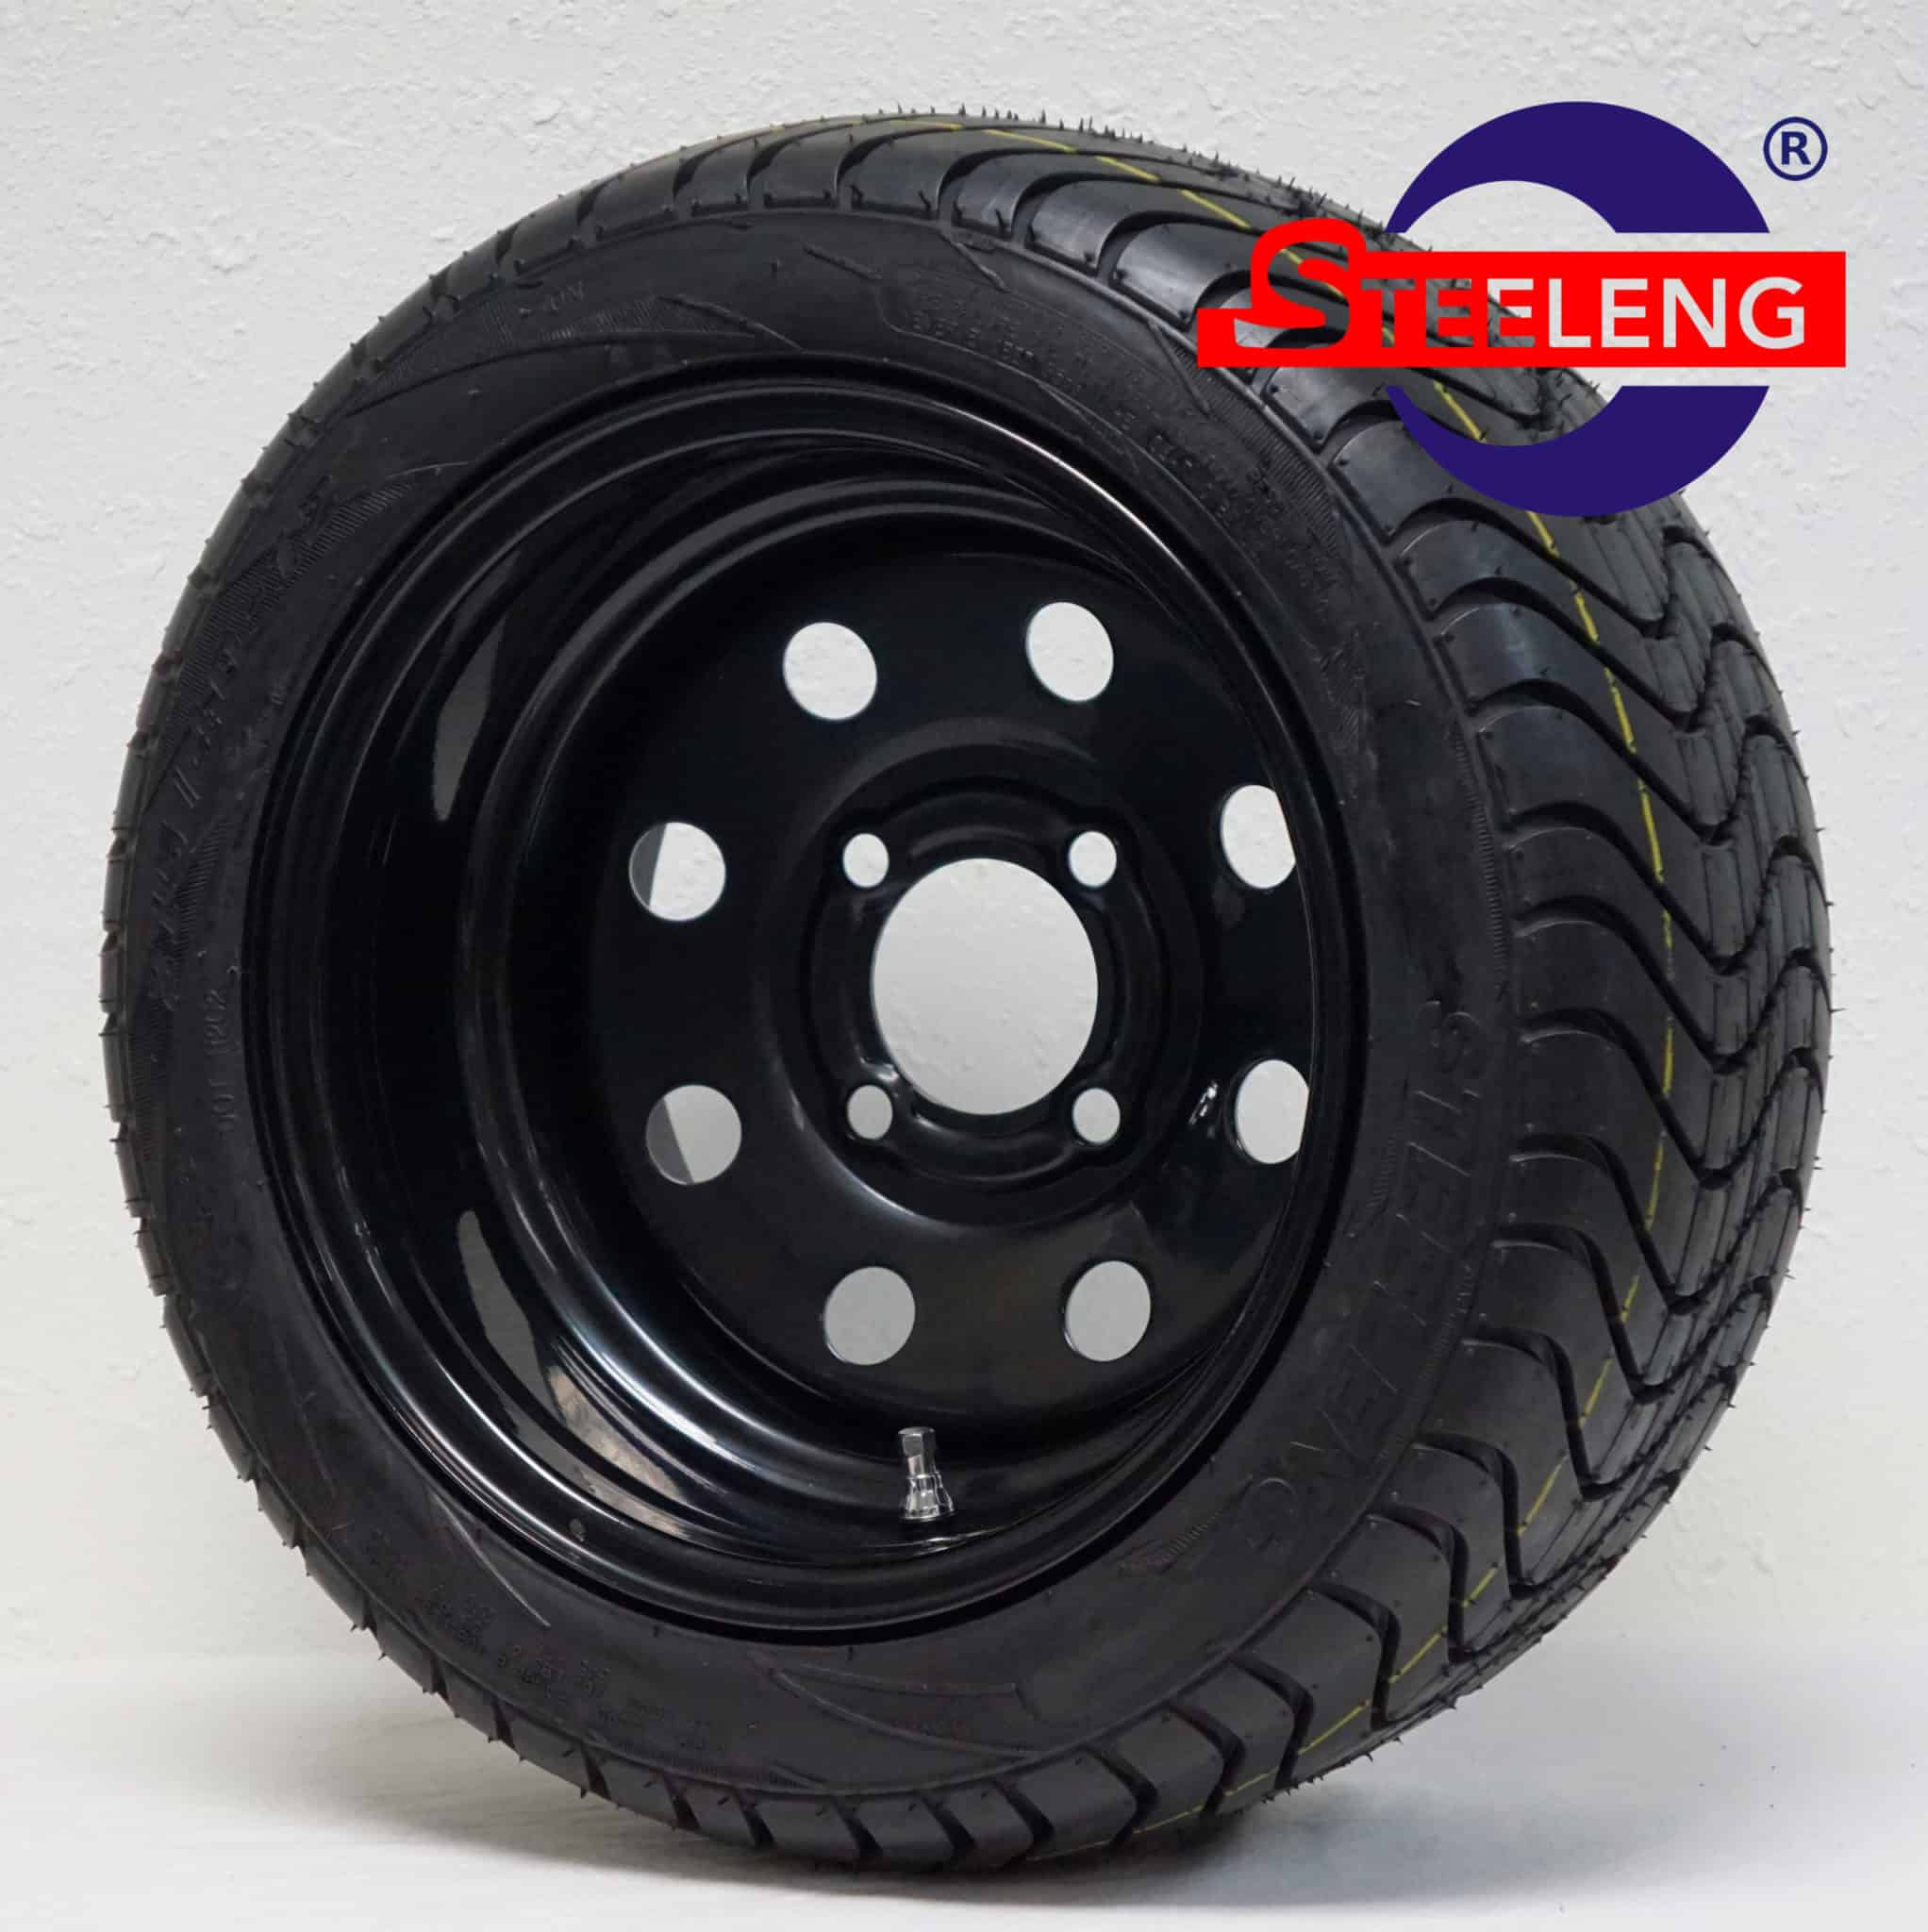 BNDL-SW1202-TR1211 12" x 7" Steel Wheel 8 Holes Black & 215/40-12 Low Profile Tire DOT Approved Set of 4